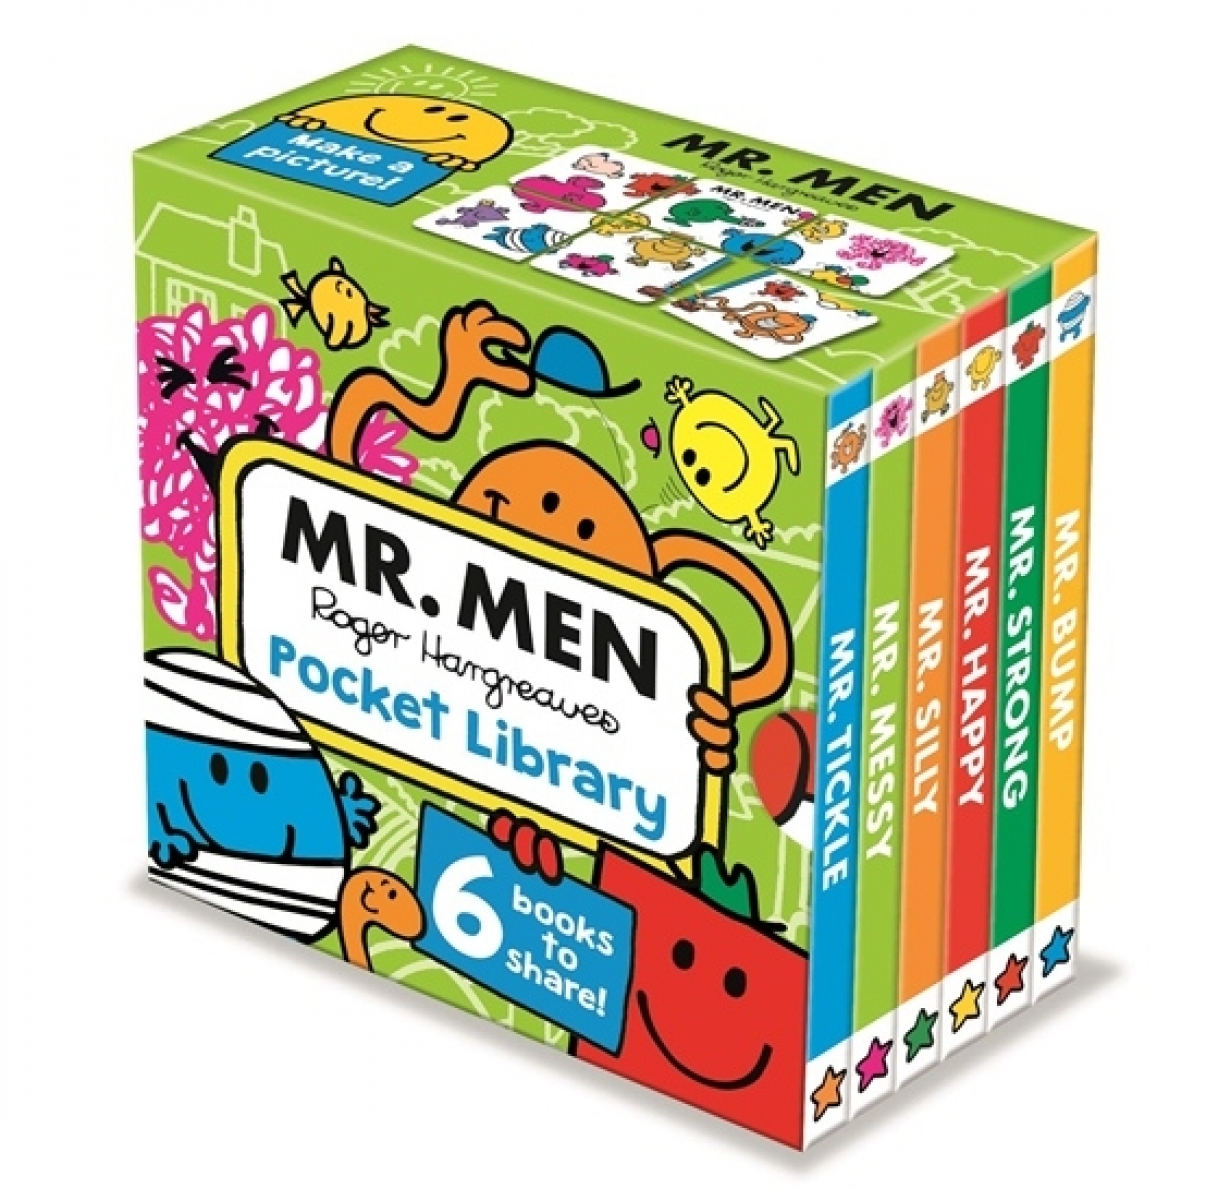 Hargreaves Roger Mr. Men. Pocket Library 